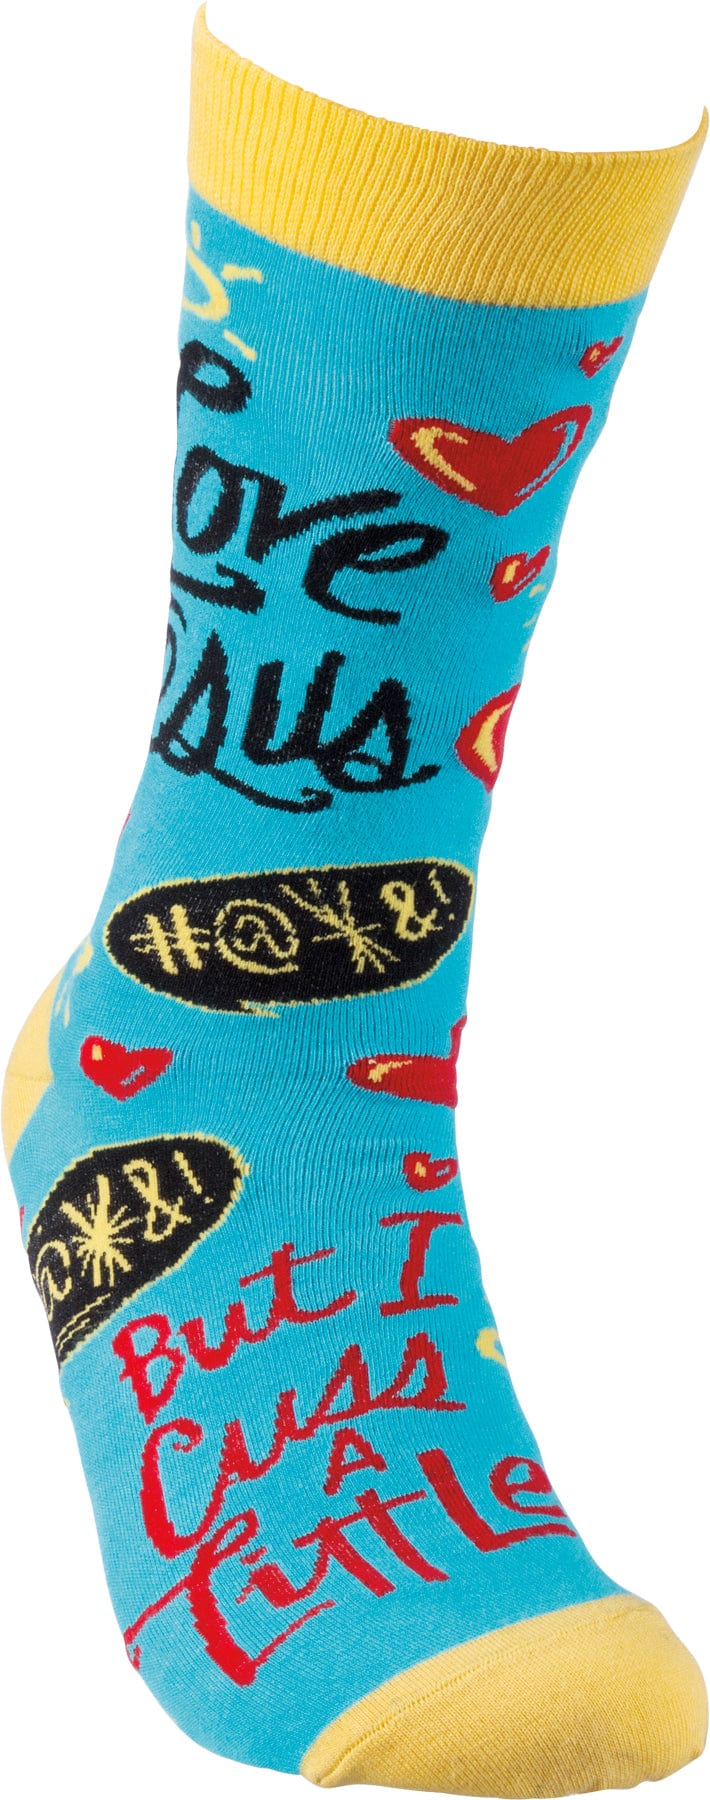 Socks One Size Fits Most Socks - I Love Jesus But I Cuss A Little PBK- 36603